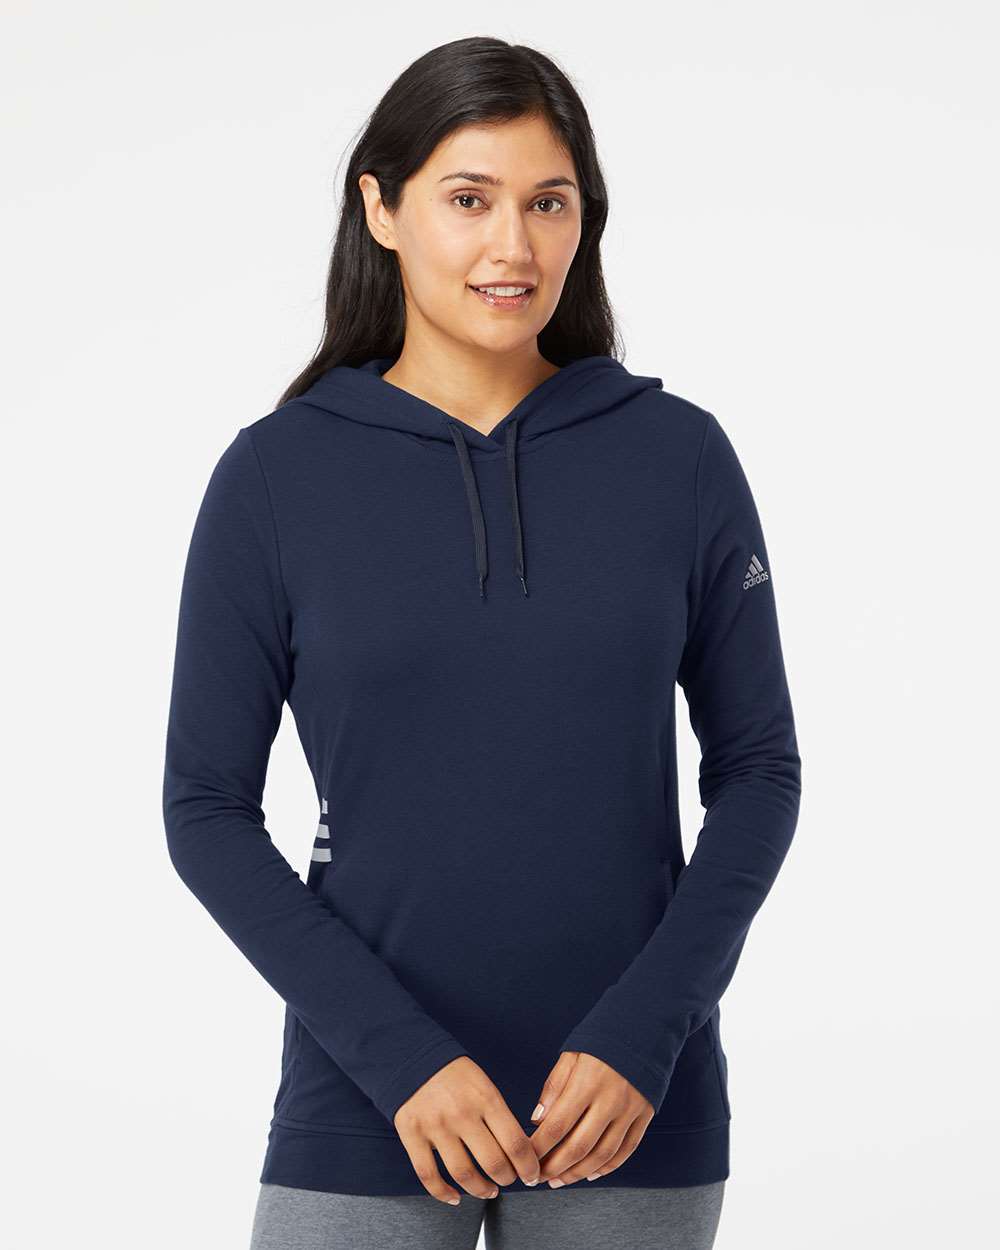 Adidas A451 Women's Lightweight Hooded Sweatshirt #colormdl_Collegiate Navy